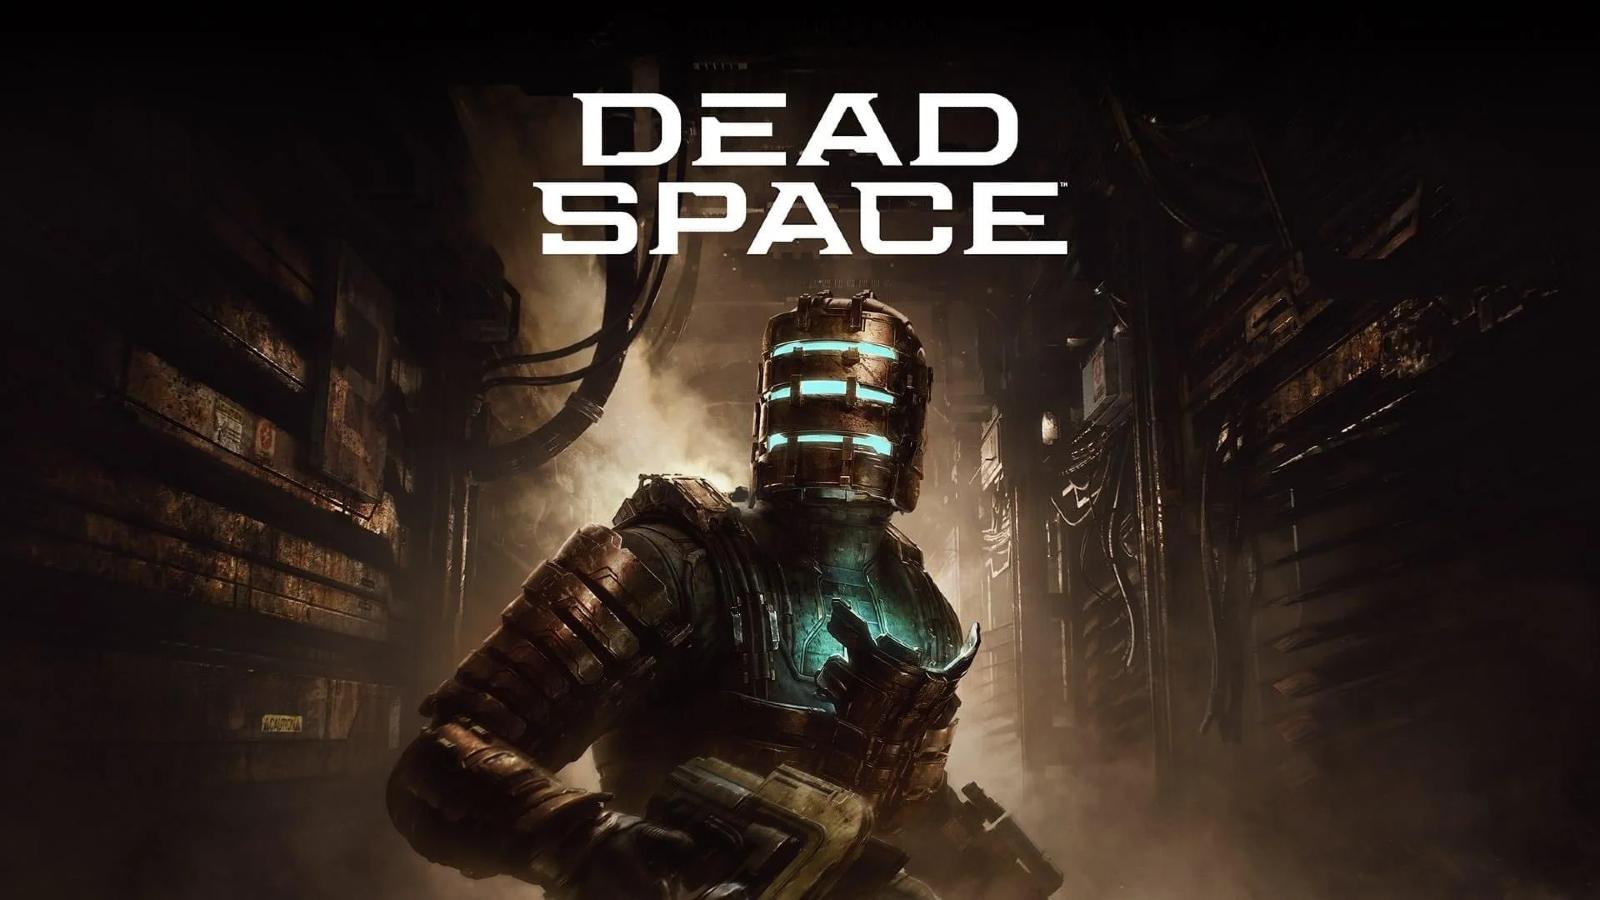 Dead space review